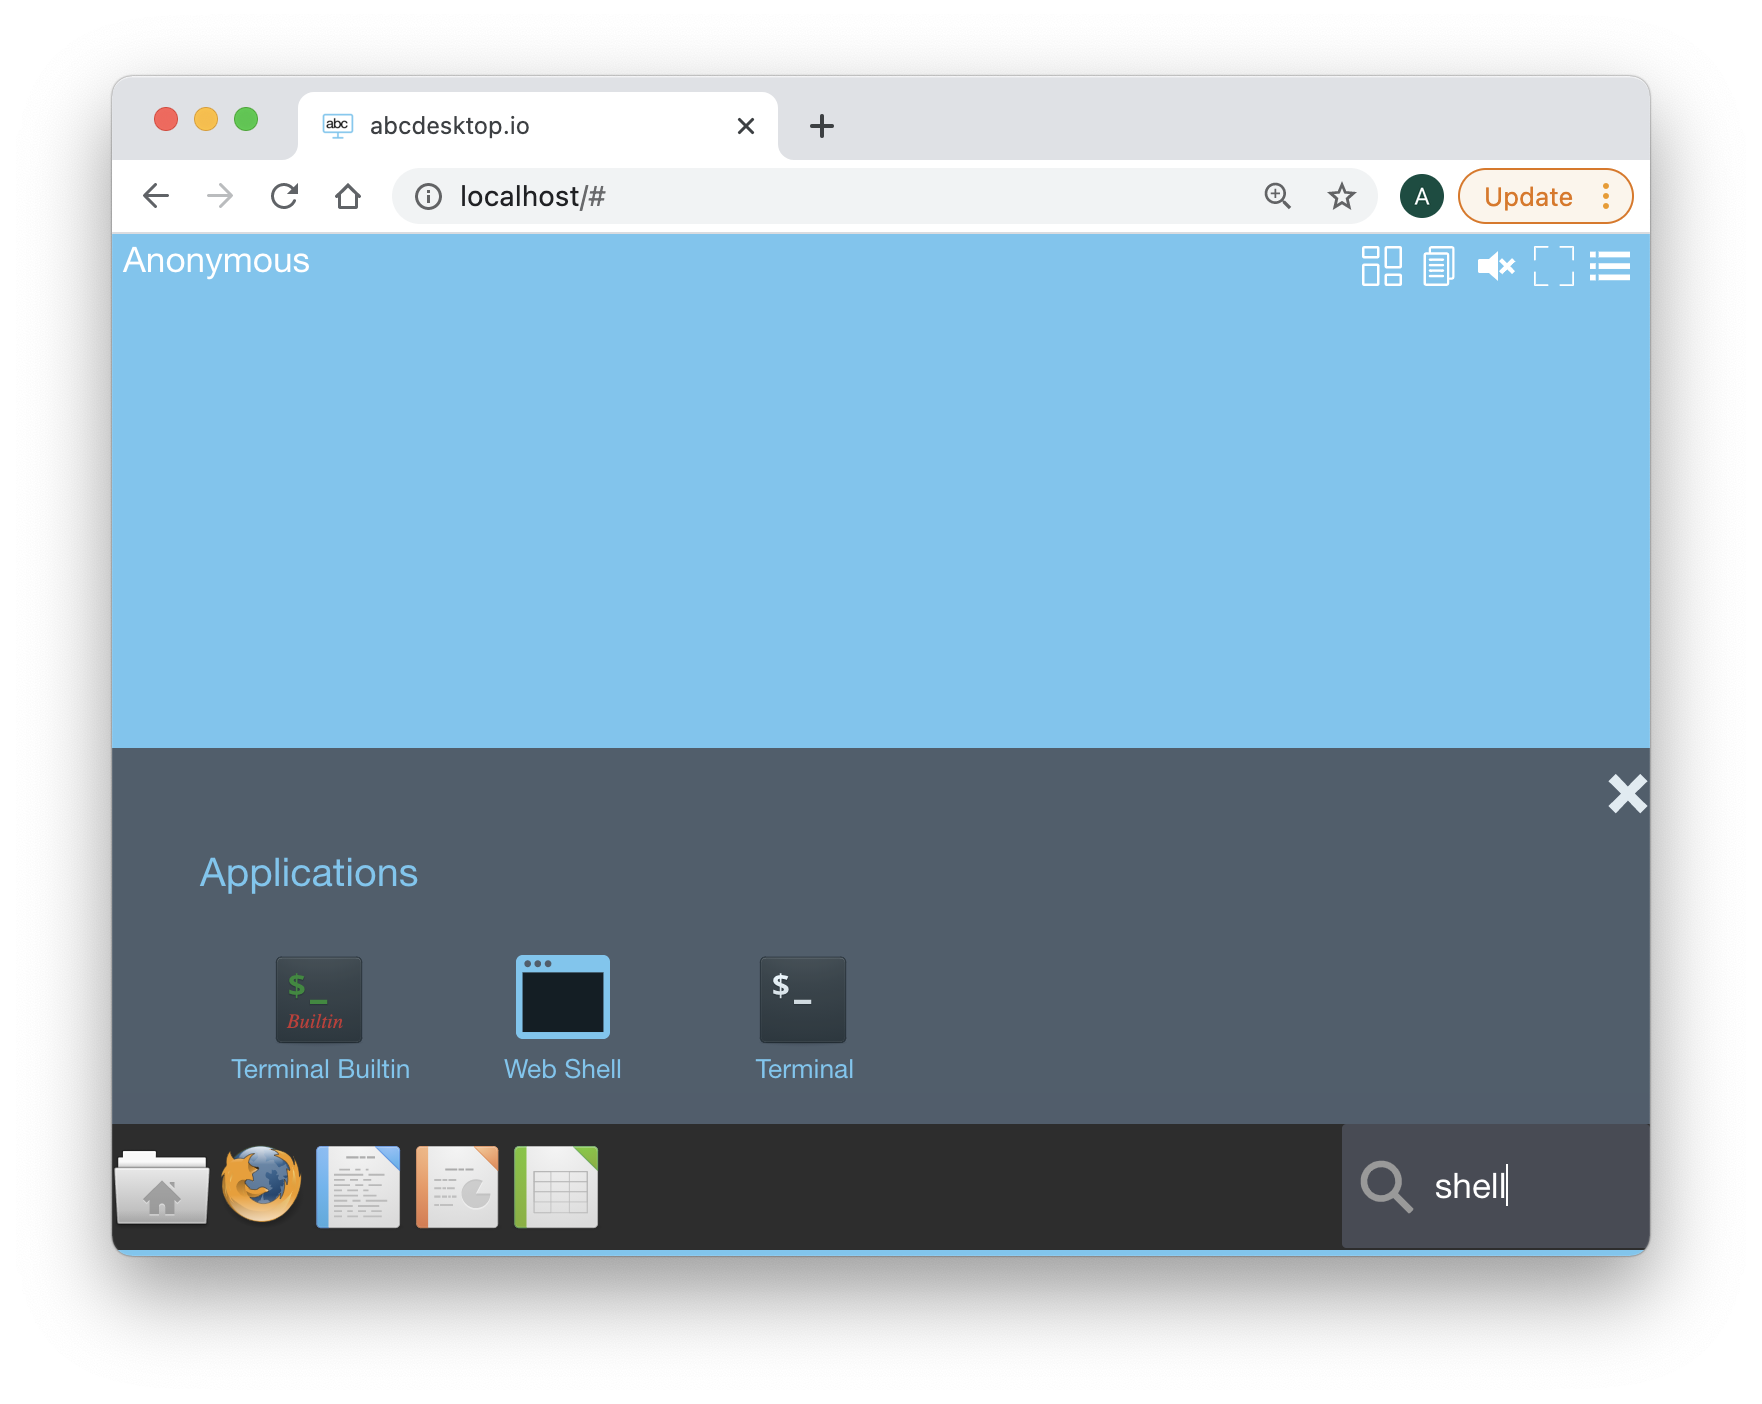 abcdesktop.io look for terminal web shell icon